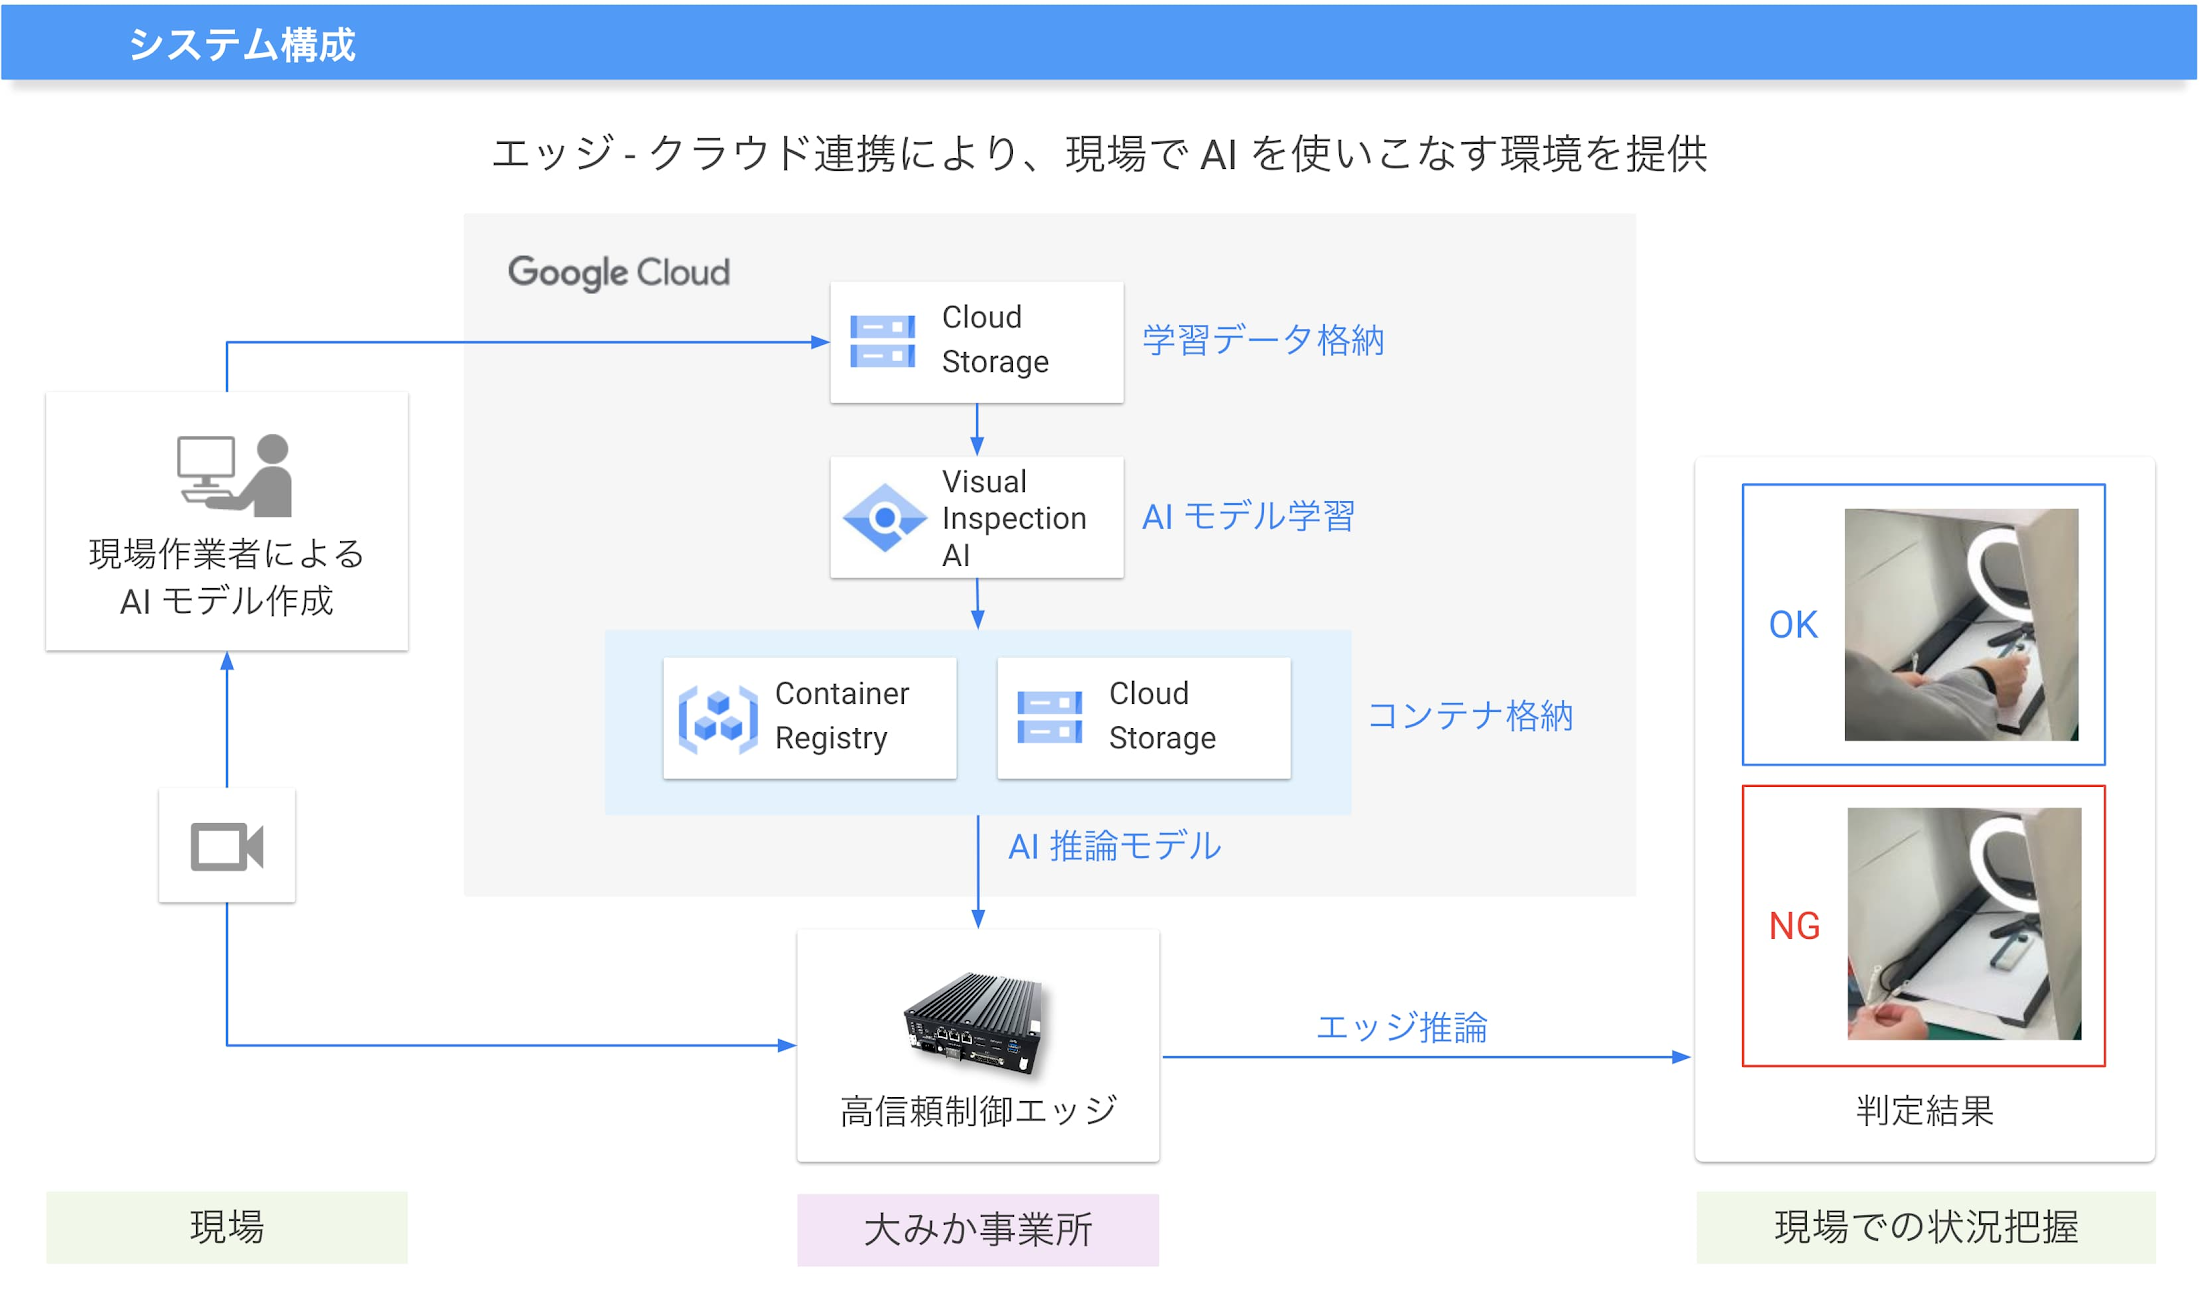 https://storage.googleapis.com/gweb-cloudblog-publish/images/hitachi_architect_small.max-2200x2200.jpg